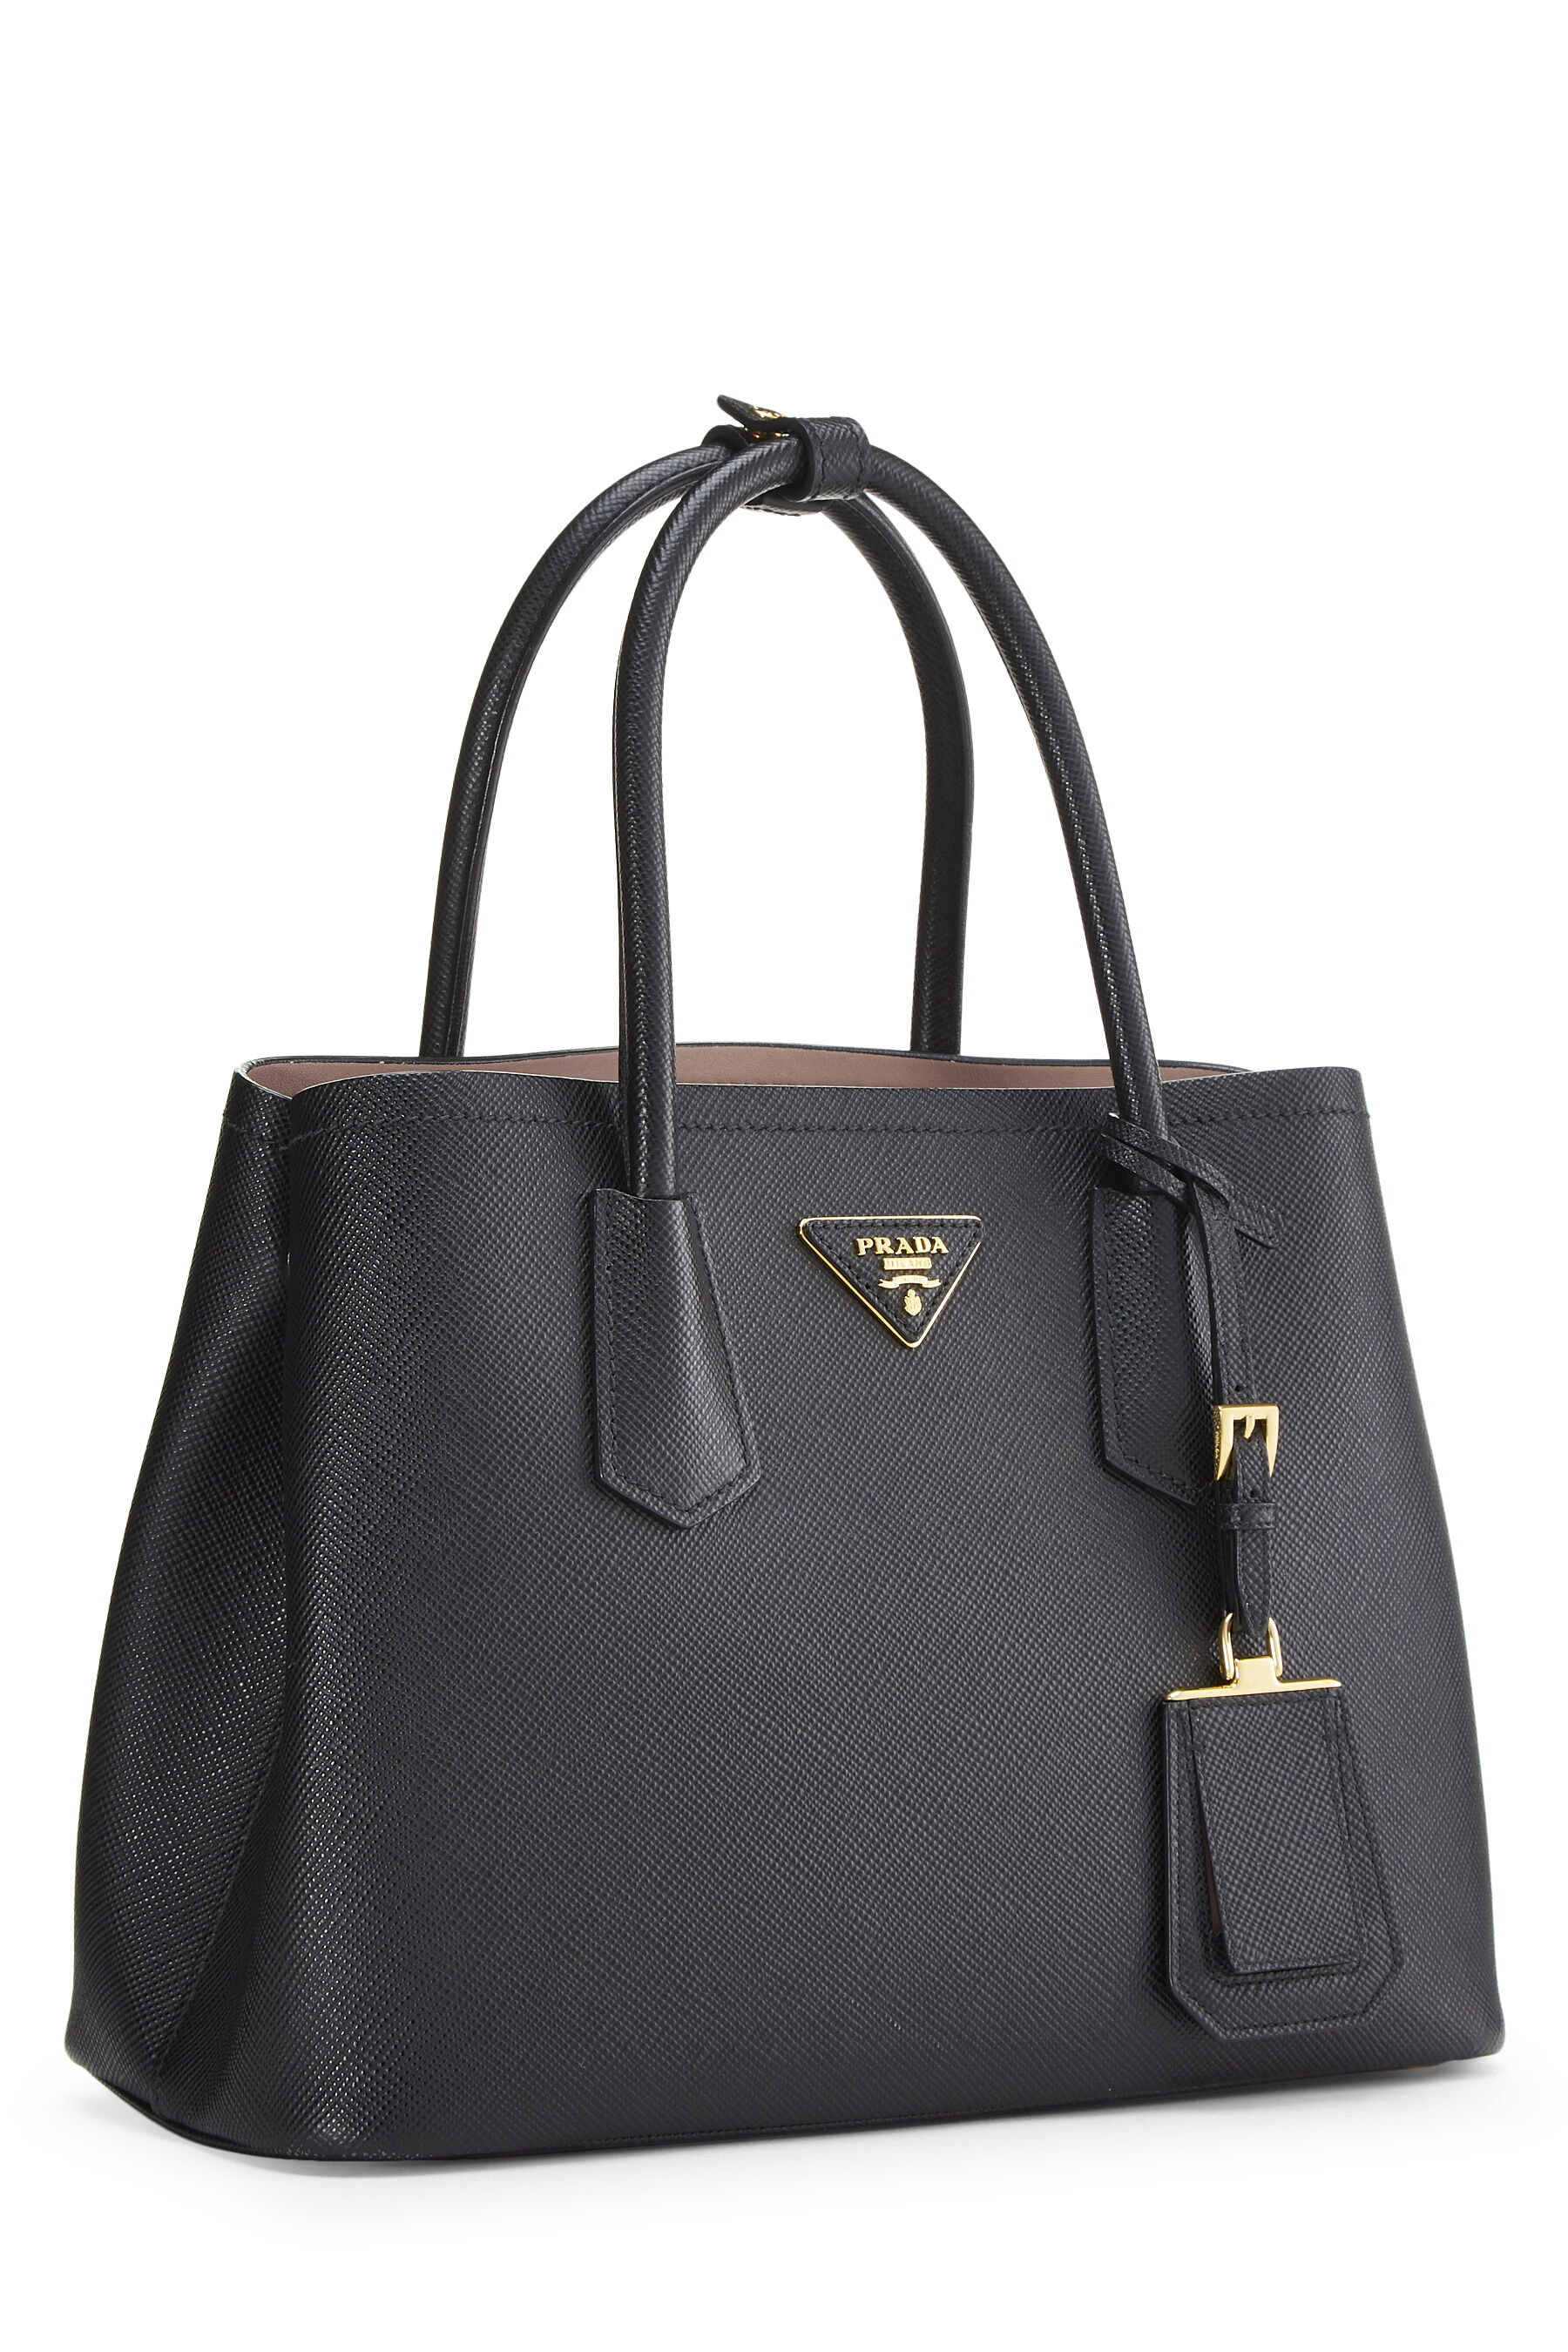 Prada Black Saffiano Cuir Leather Handbag